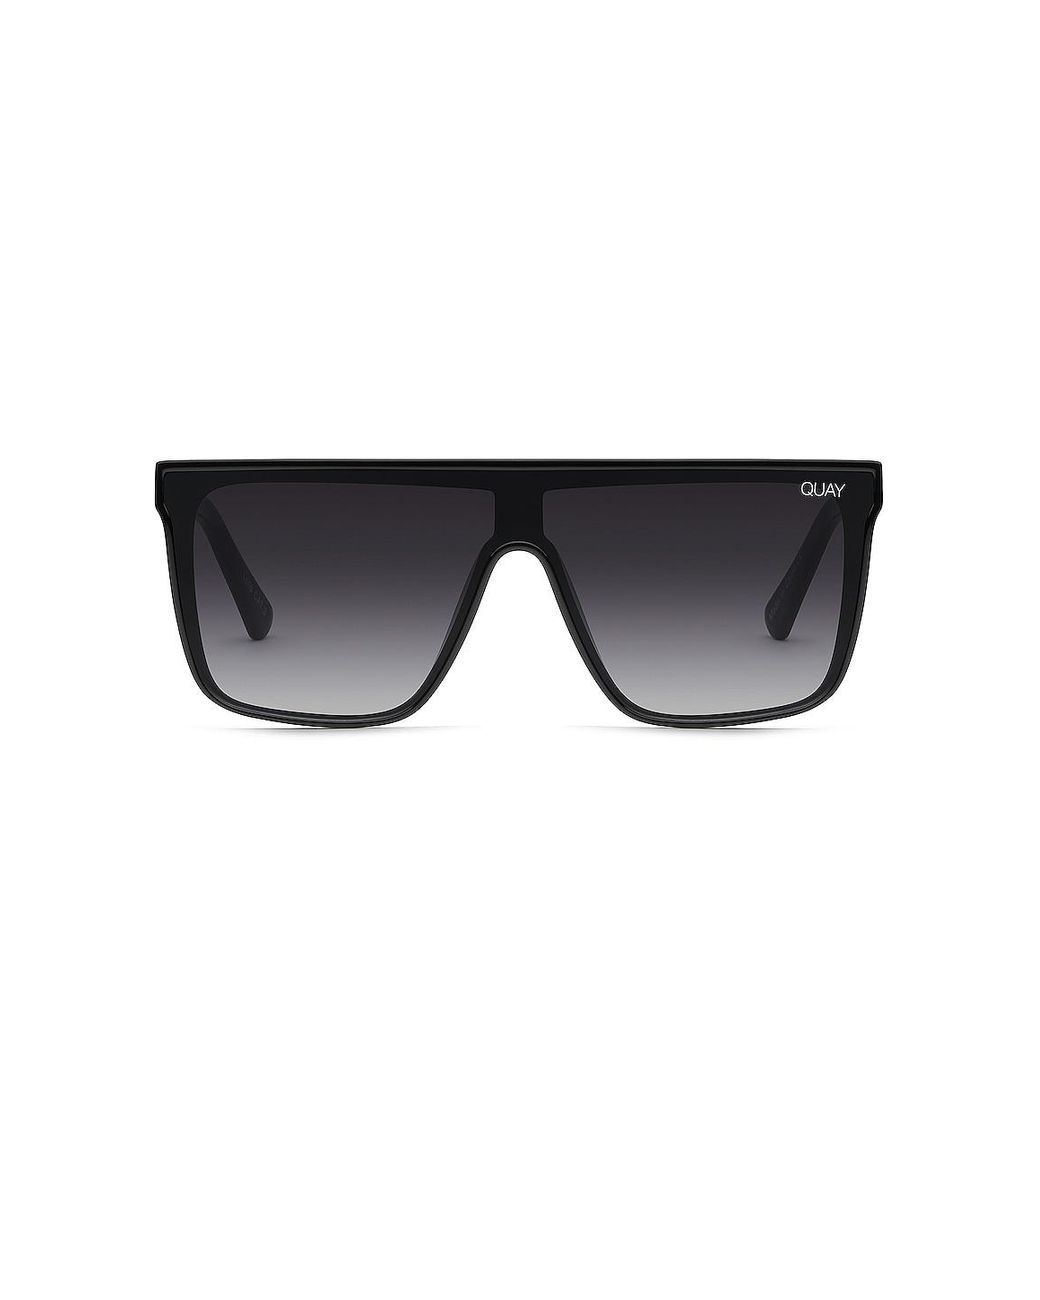 Quay Nightfall Sunglasses in Black | Lyst